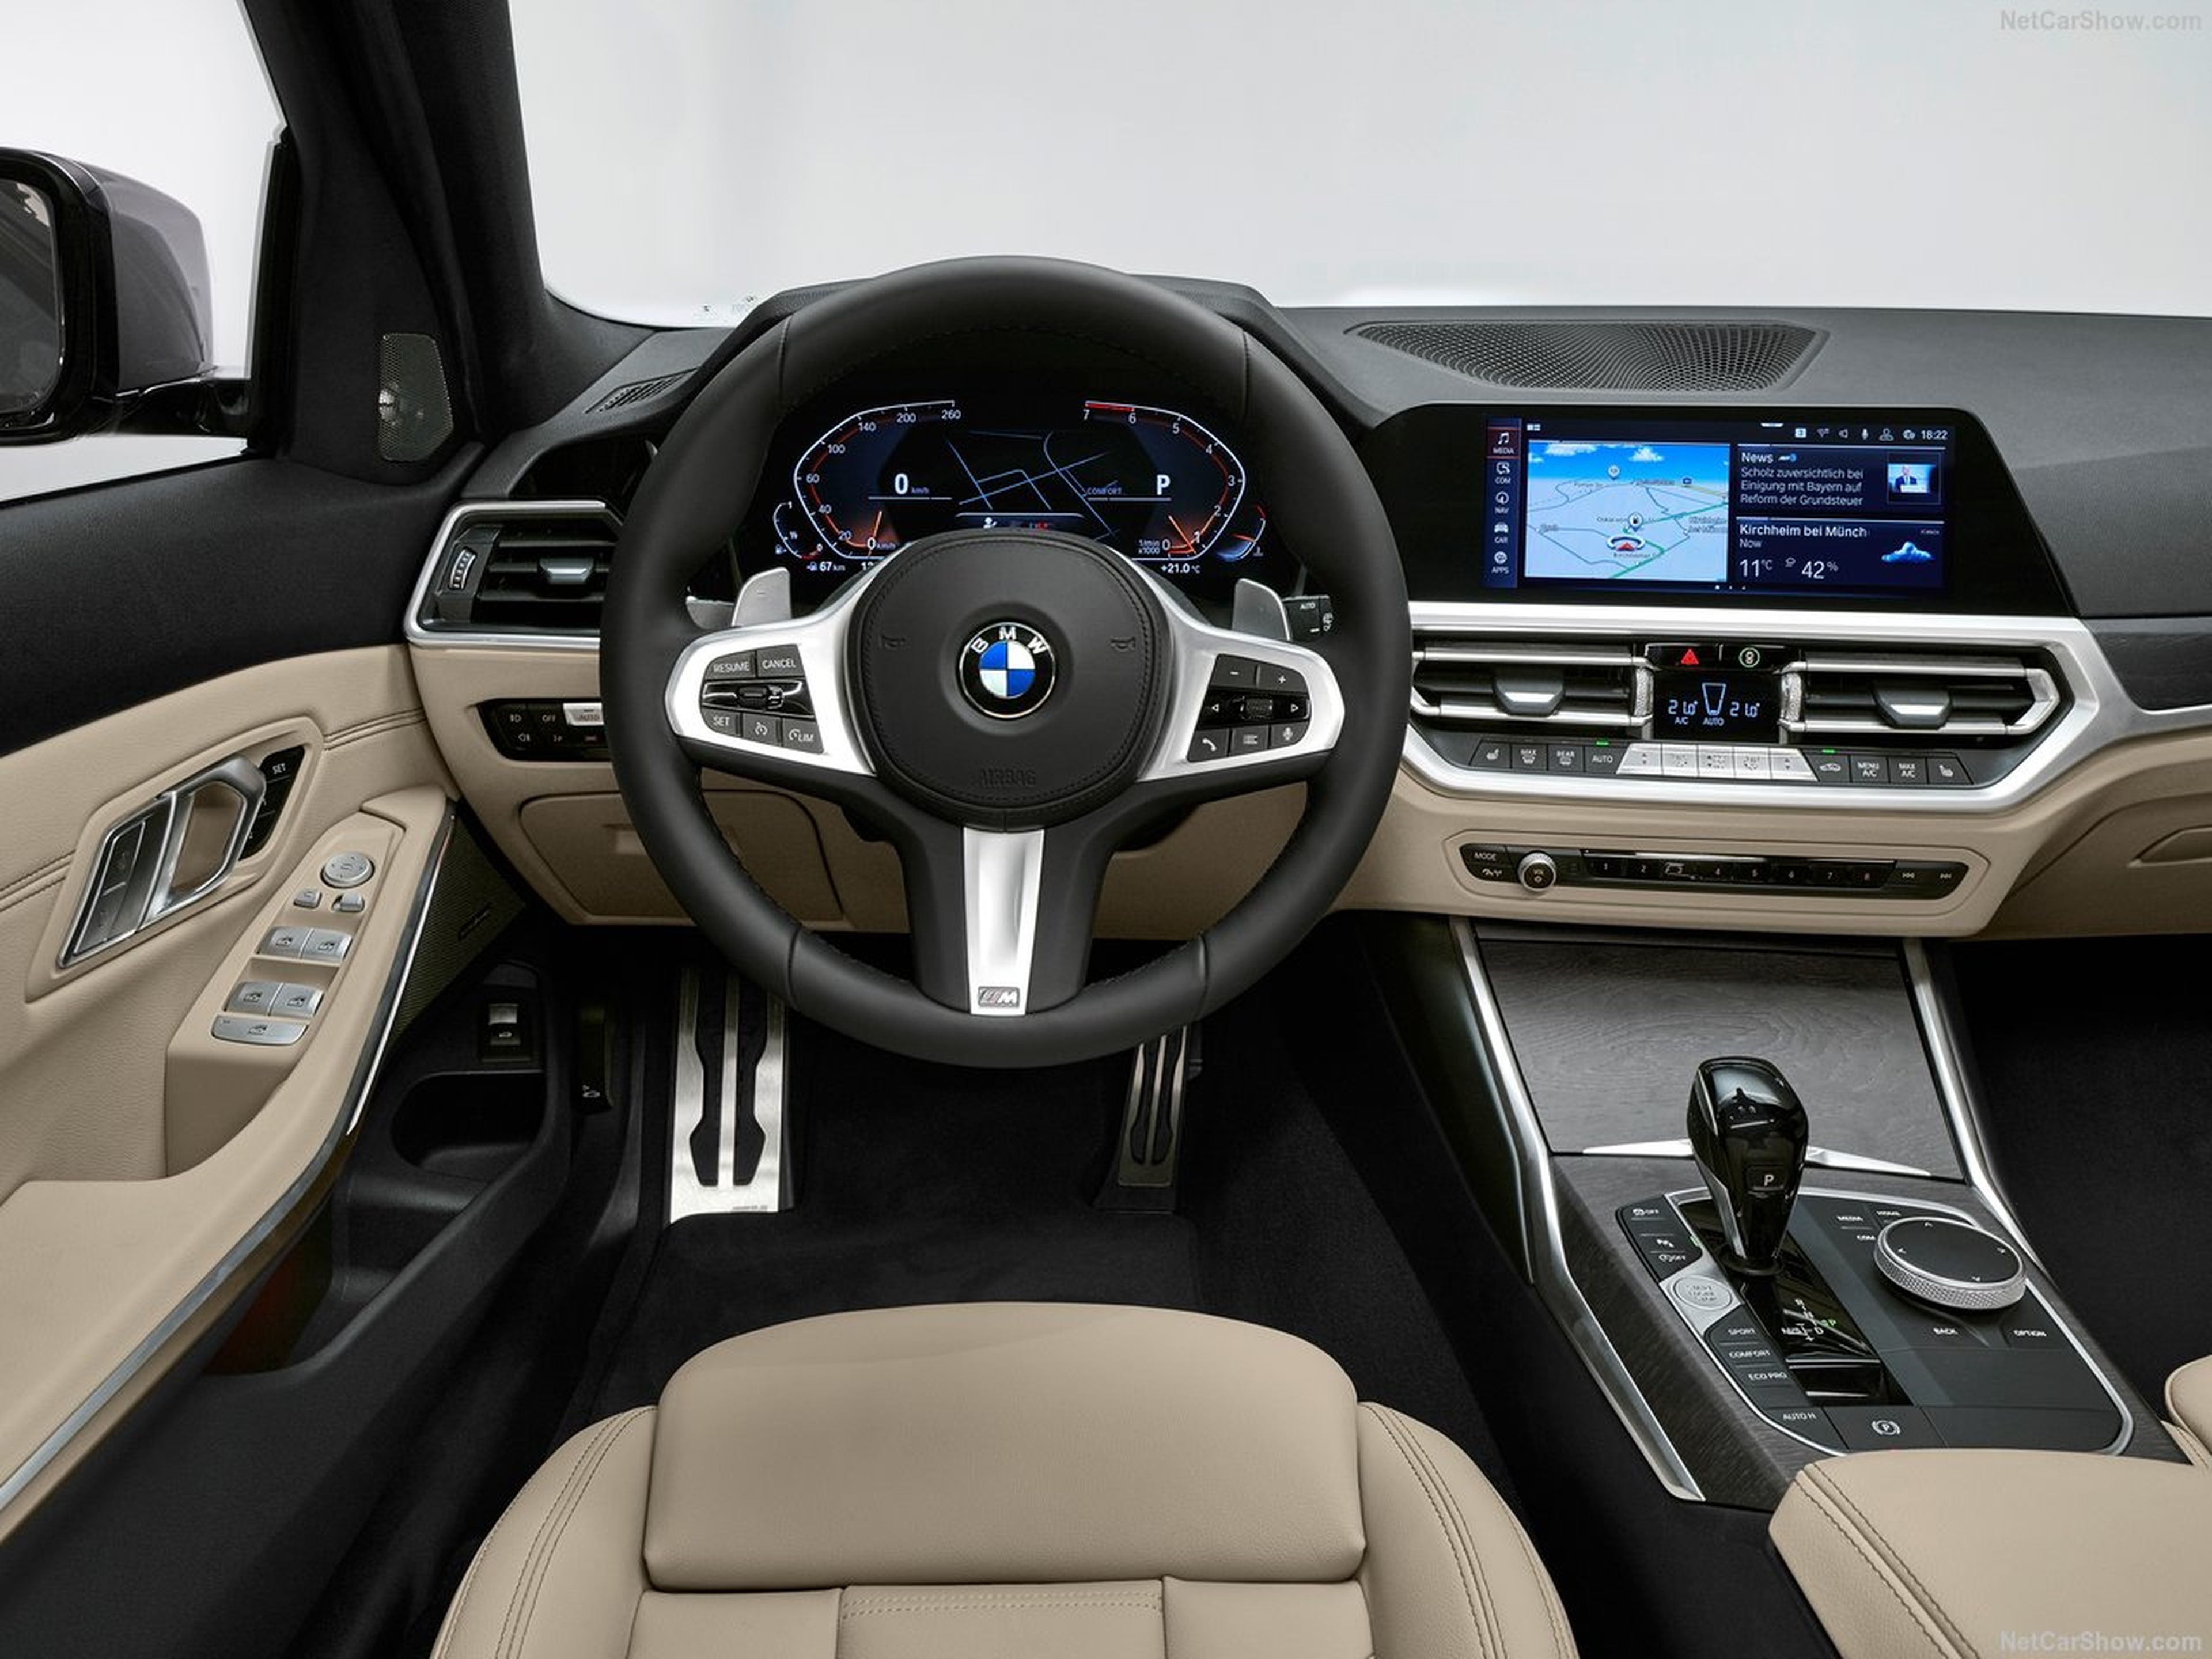 BMW Serie 3 Touring 2019 interior